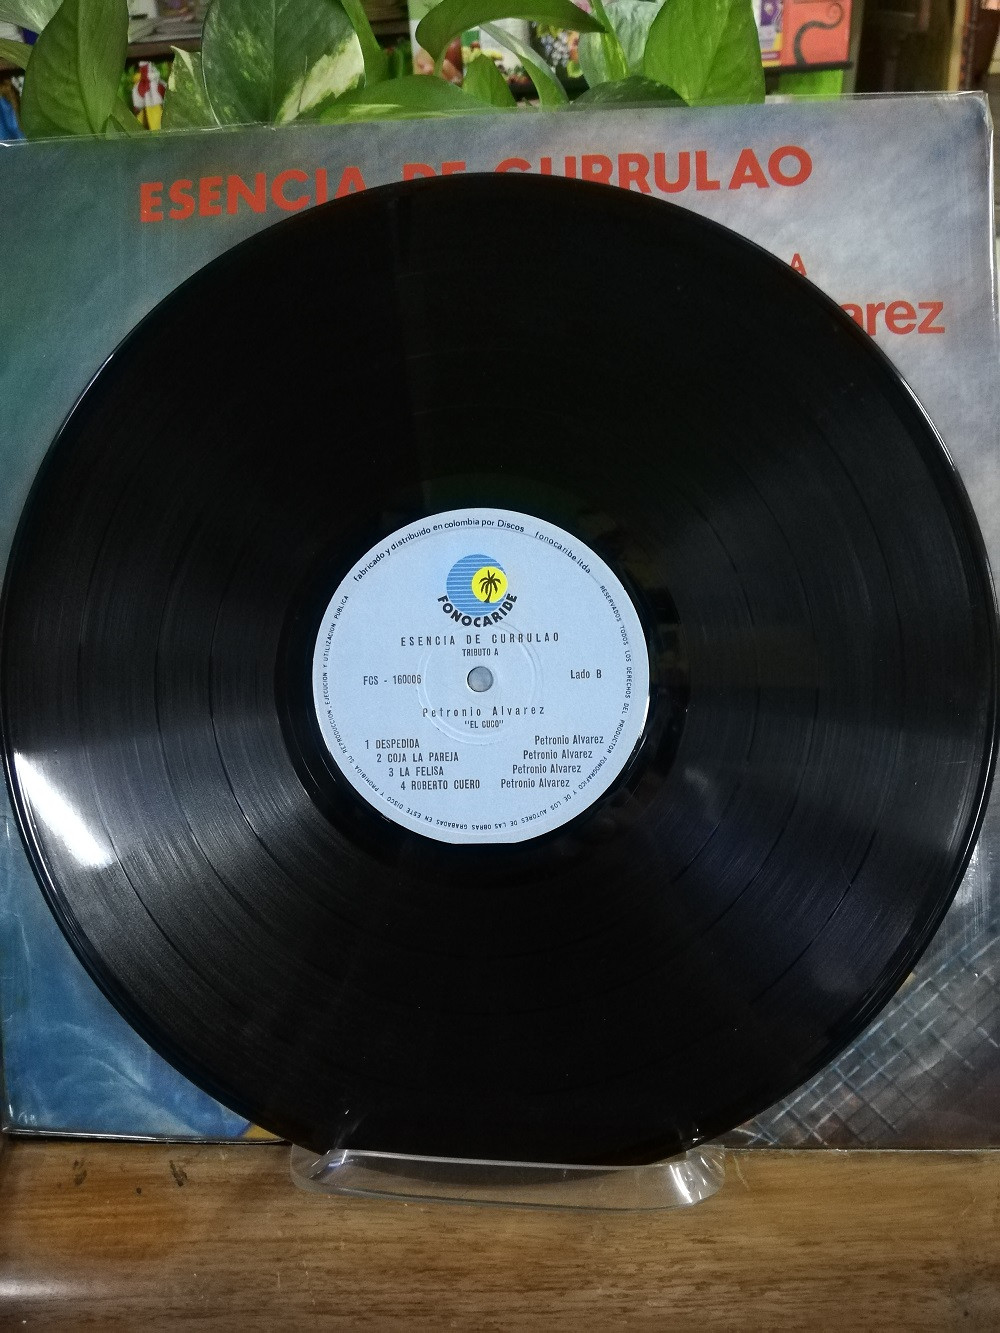 Imagen LP TRIBUTO A PETRONIO ALVAREZ - ESENCIA DE CURRULAO 4